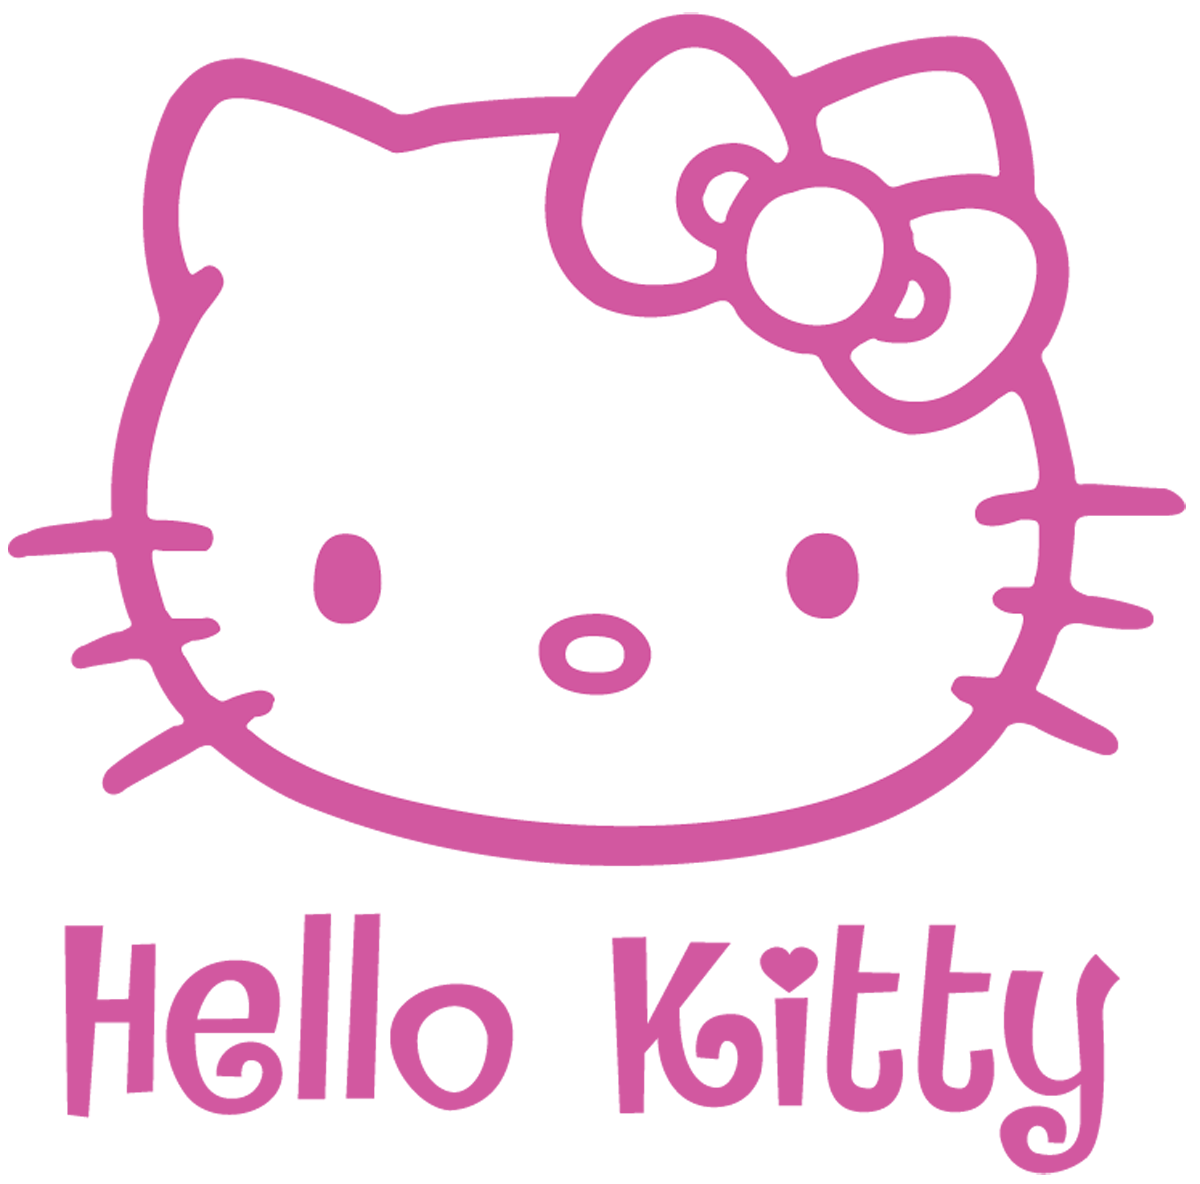 Vhiie Kitty April 2016